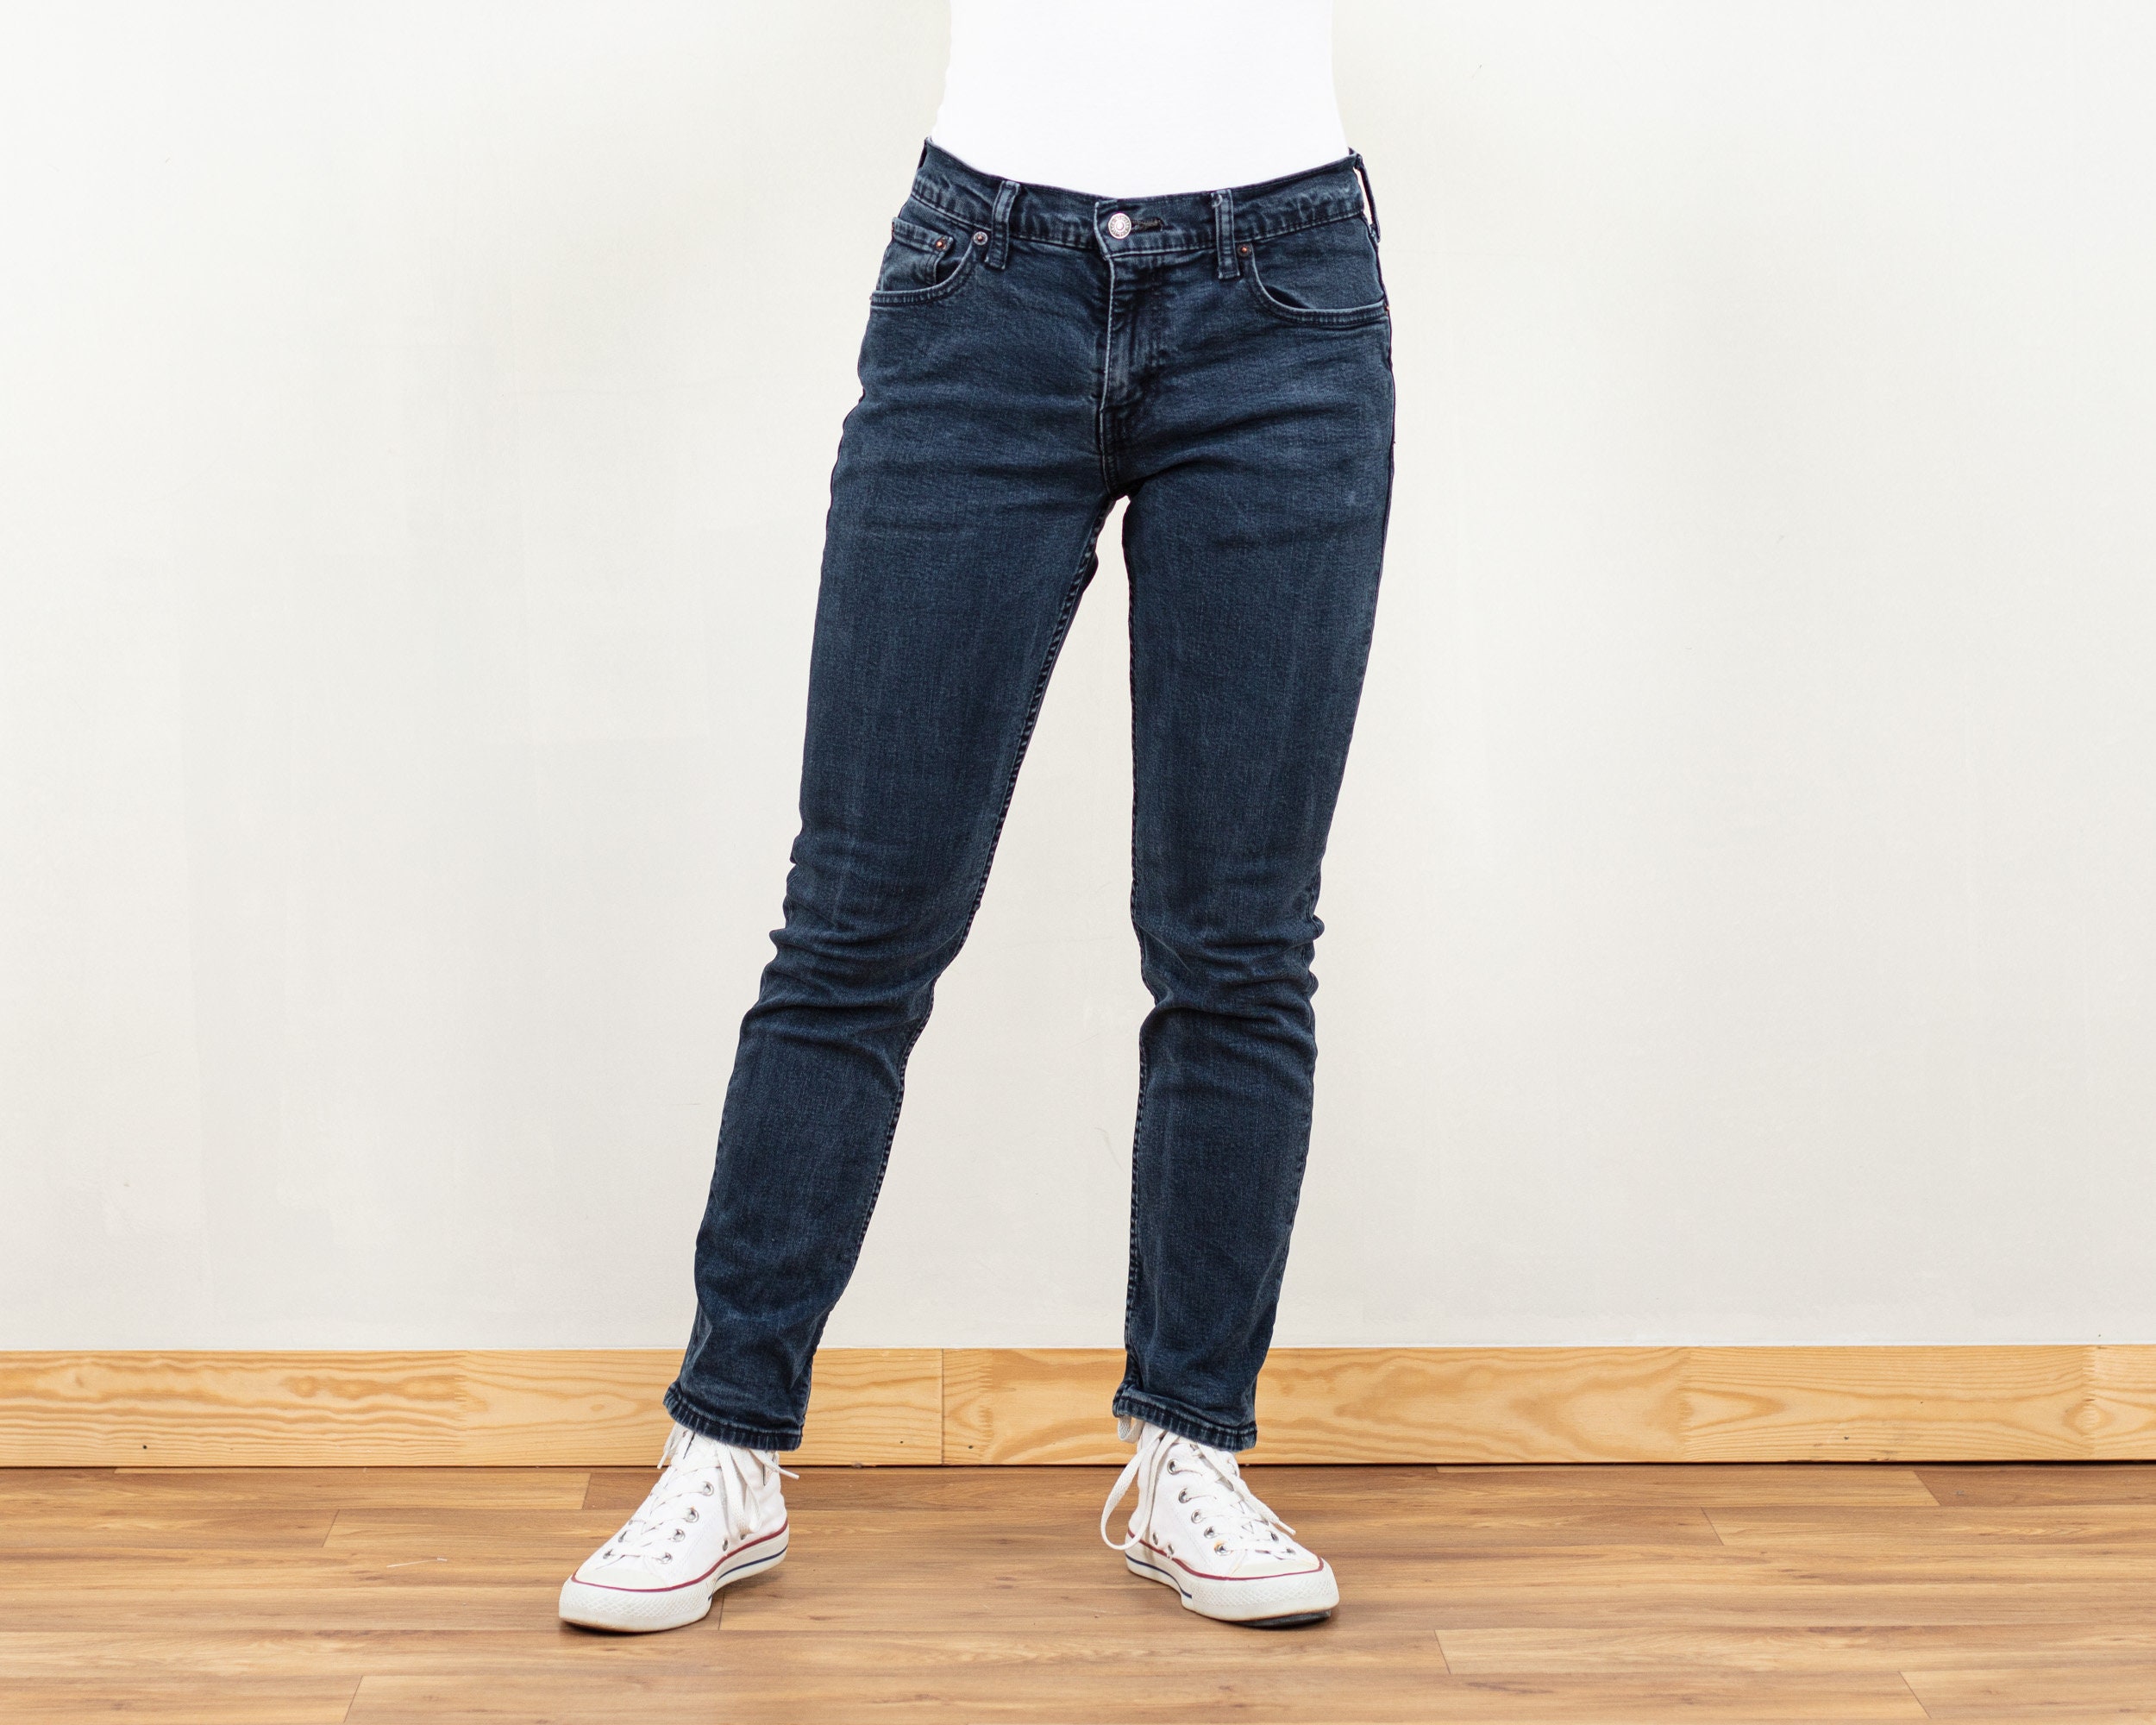 LEVIS 511 Jeans Dark Wash Denim Pants Stretchy Skinny Jeans - Etsy Israel